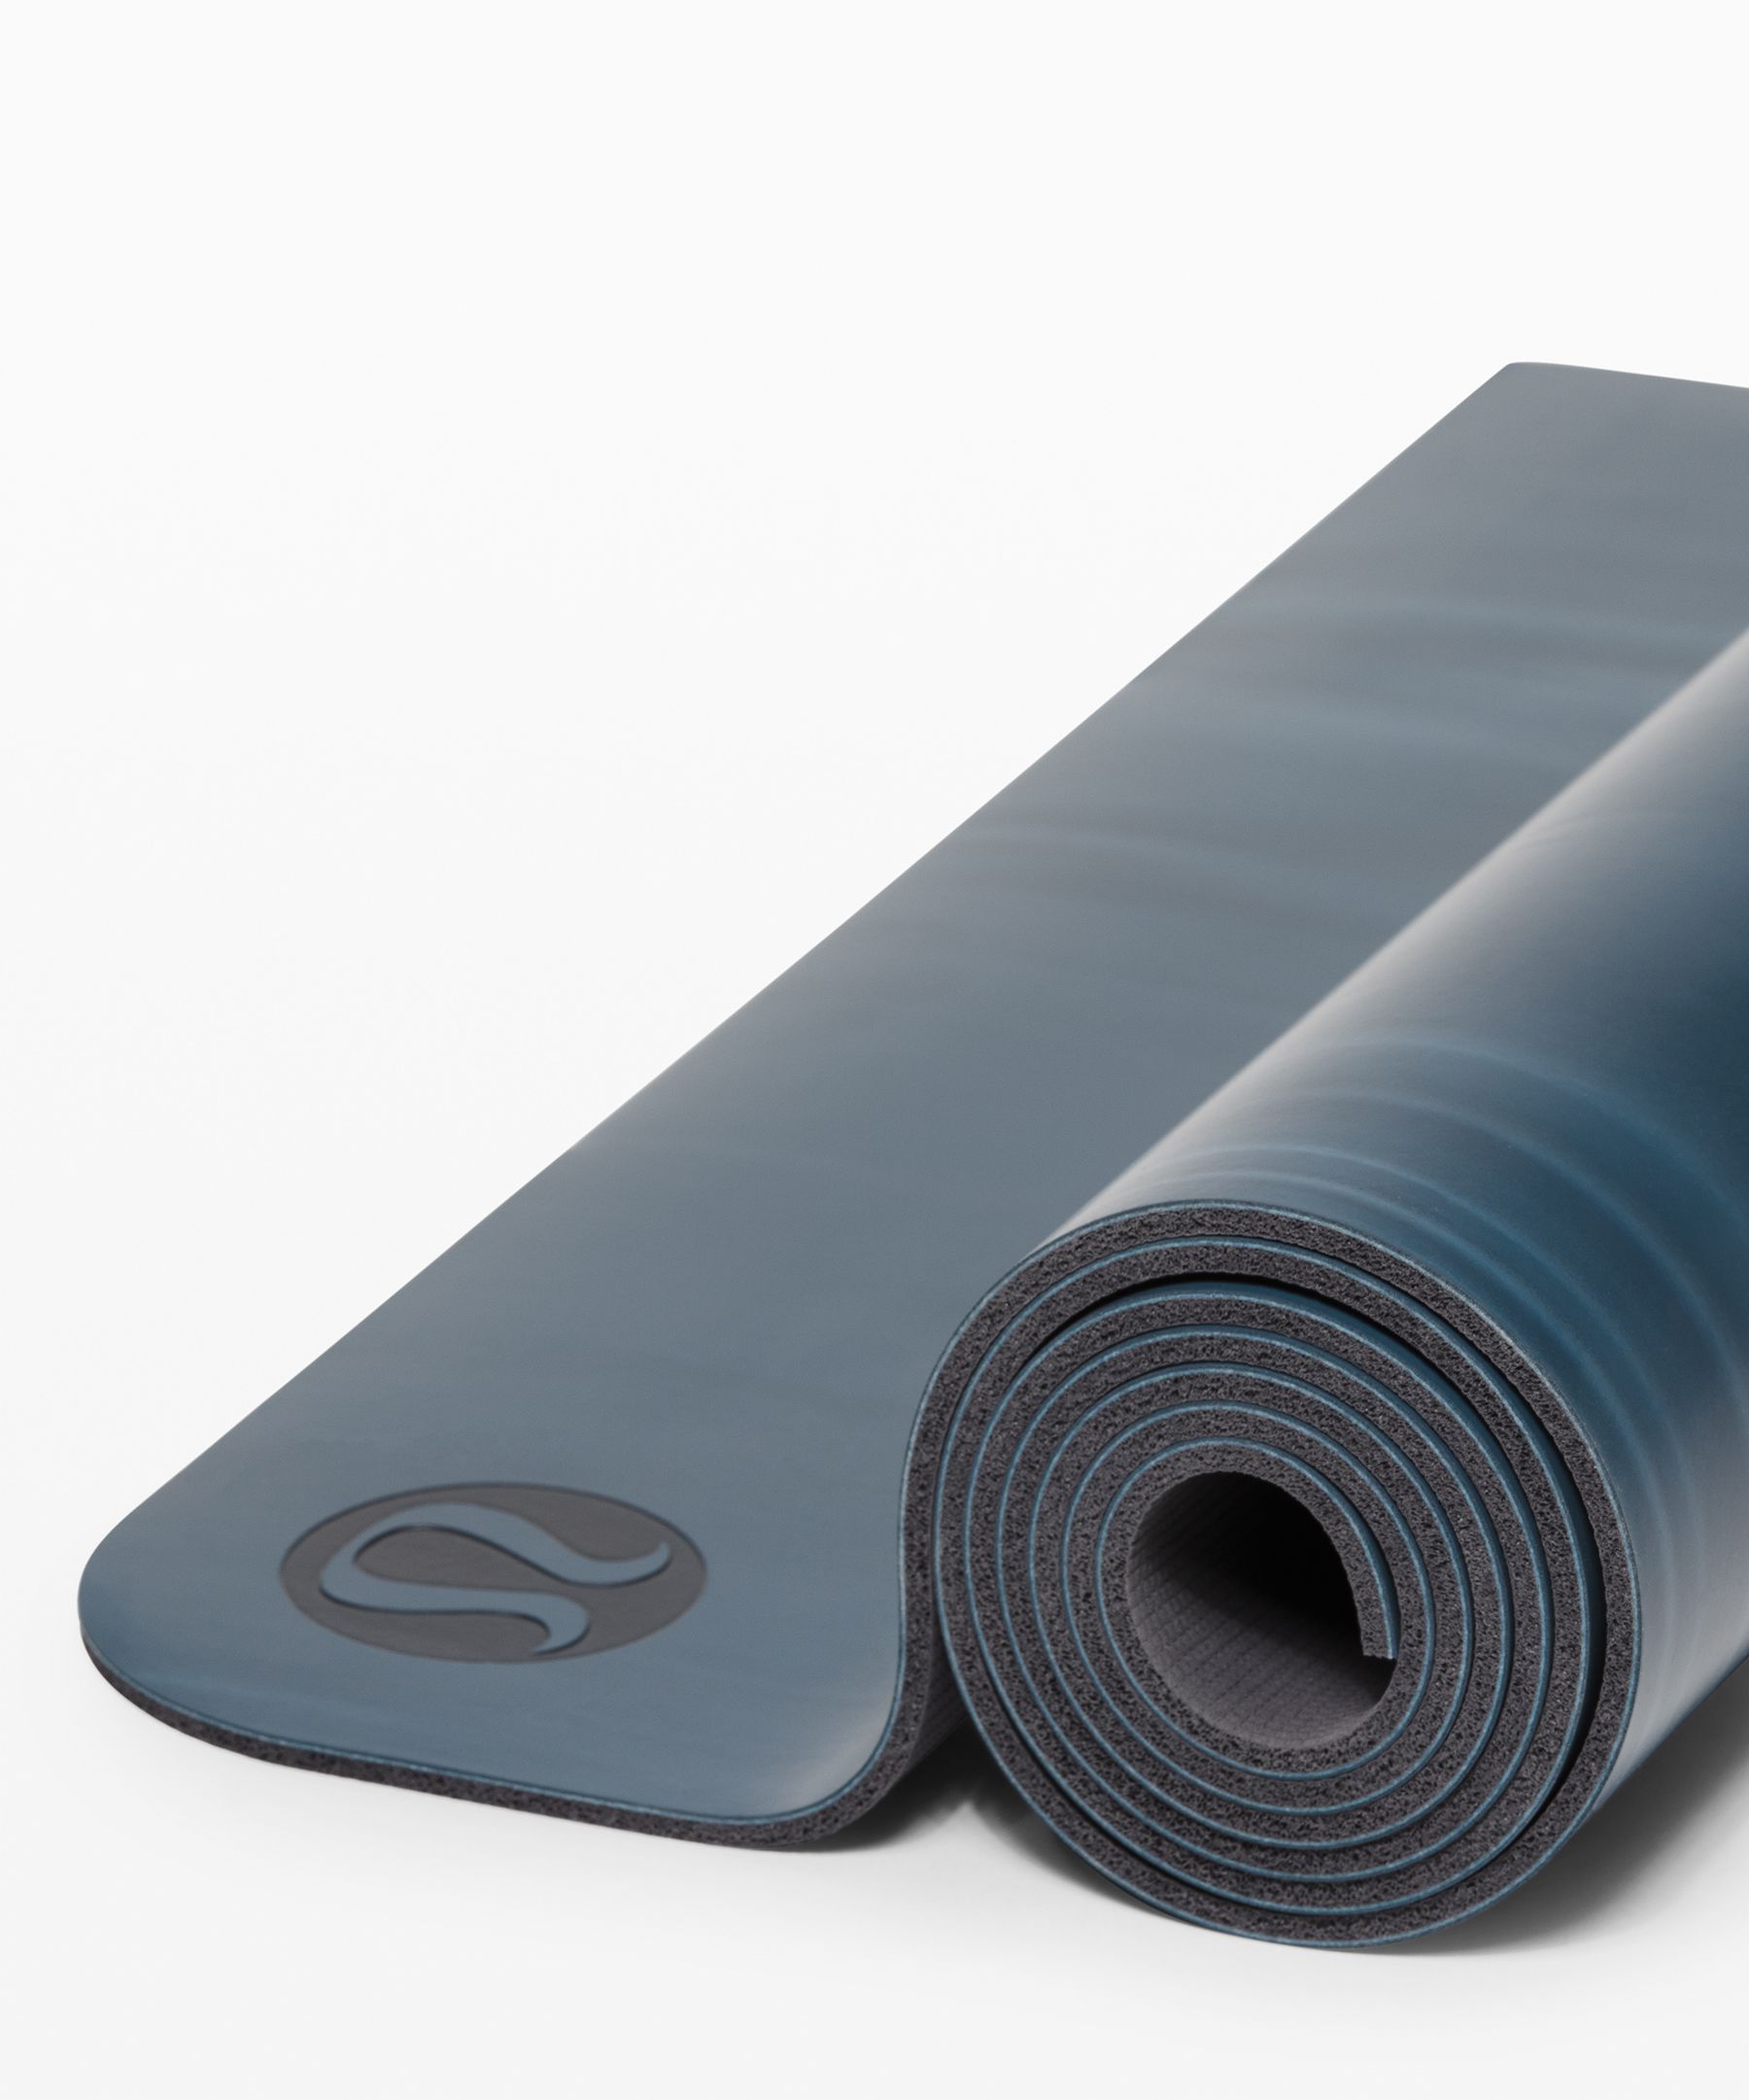 lululemon outlet yoga mat